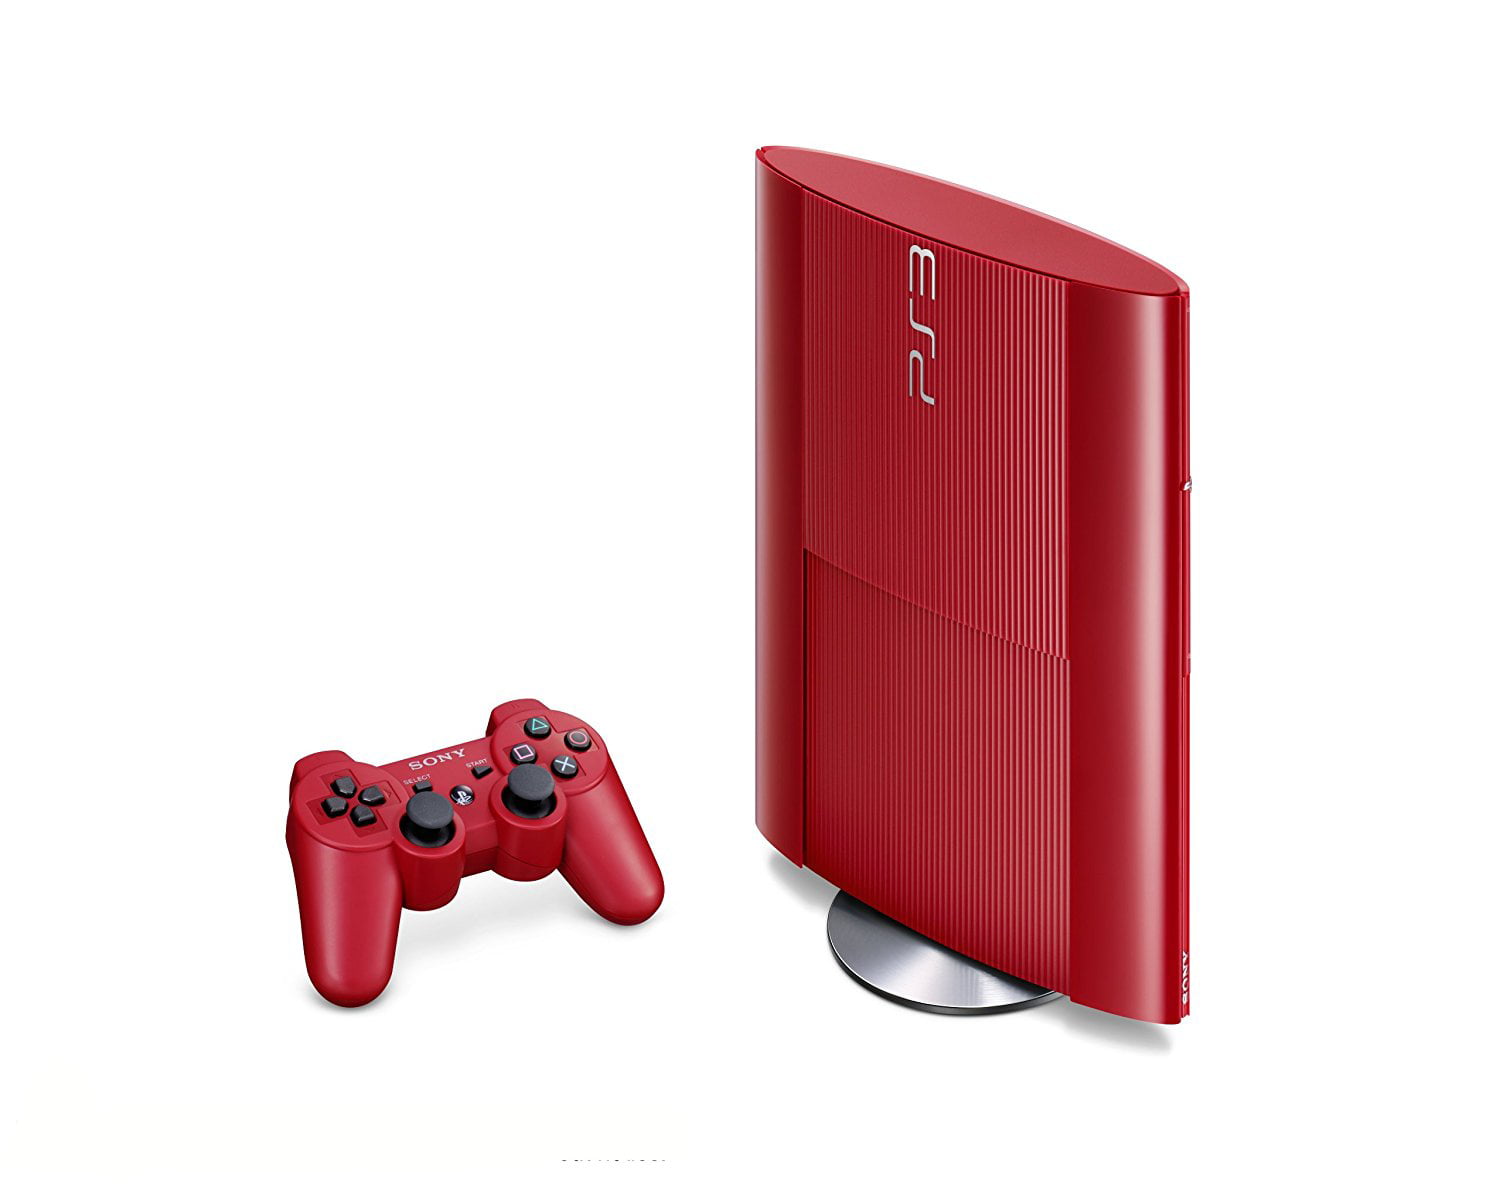 Comprar PS3 Consola 500GB Roja + 2 Mandos PS3